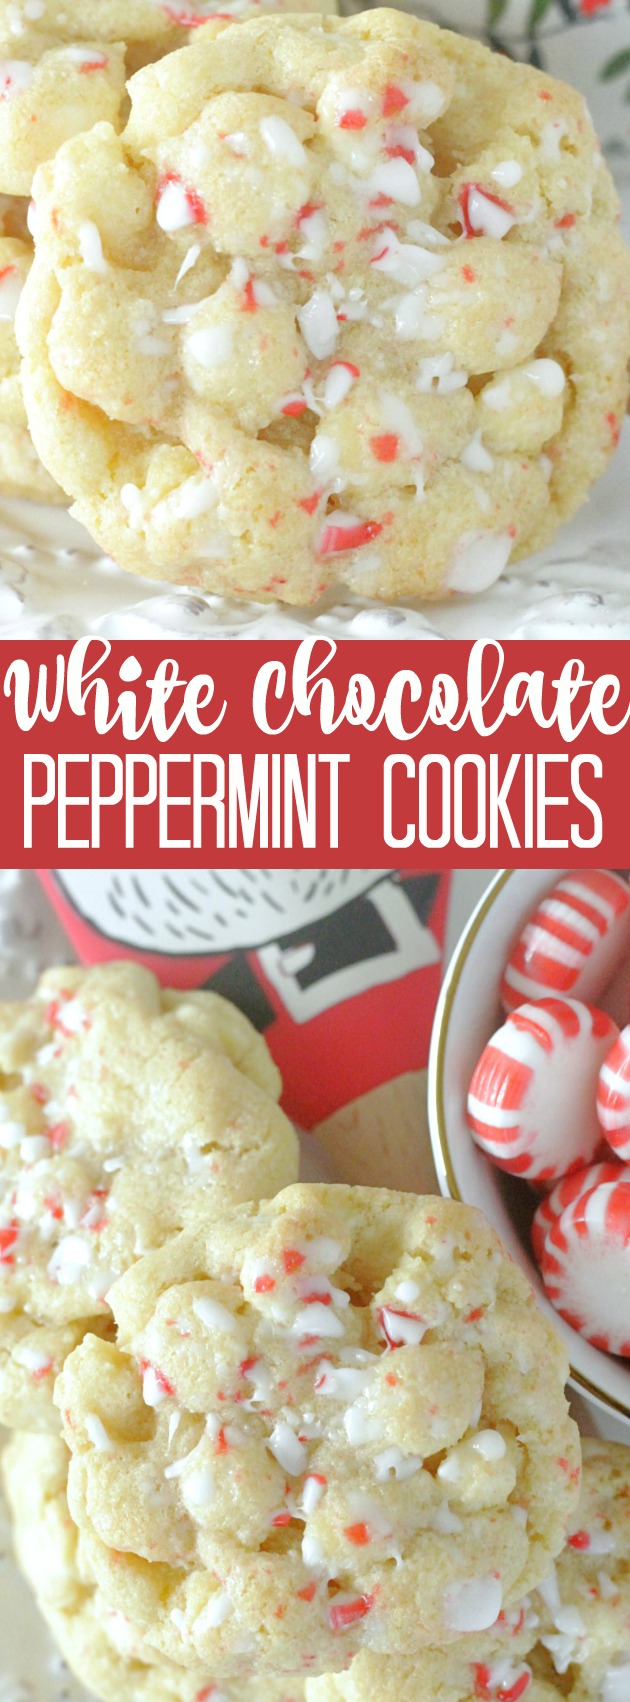 White Chocolate Peppermint Cookies | Foodtastic Mom #christmascookies #holidaycookies #cookierecipes #whitechocolatepeppermint #cookies